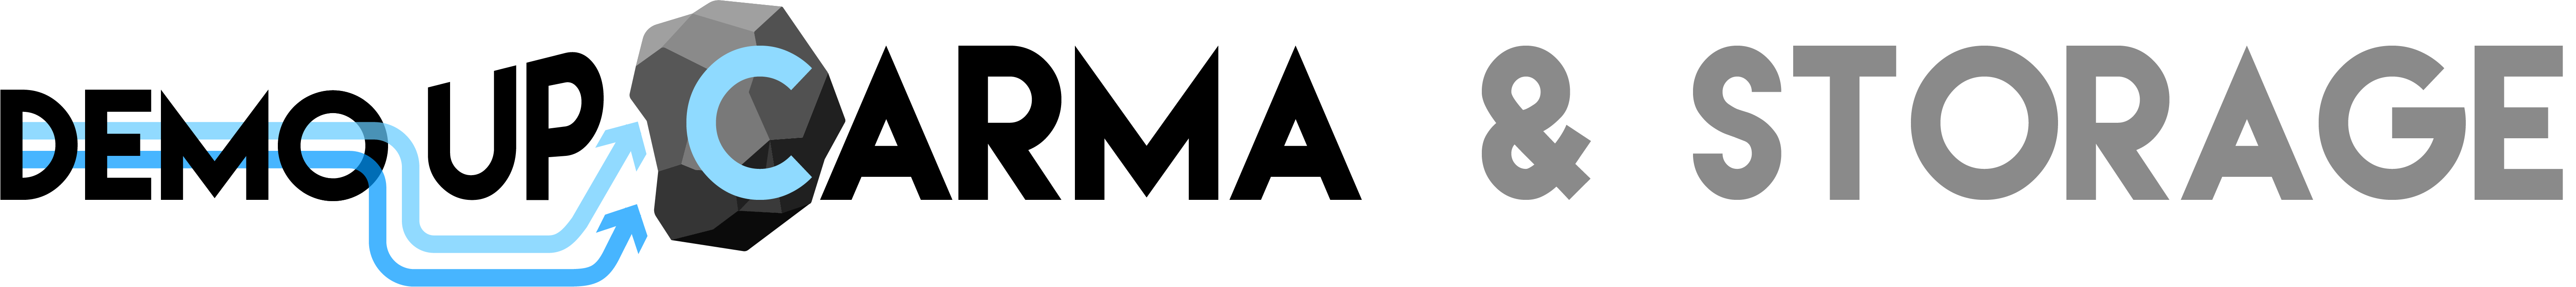 DemoUpCarma logo